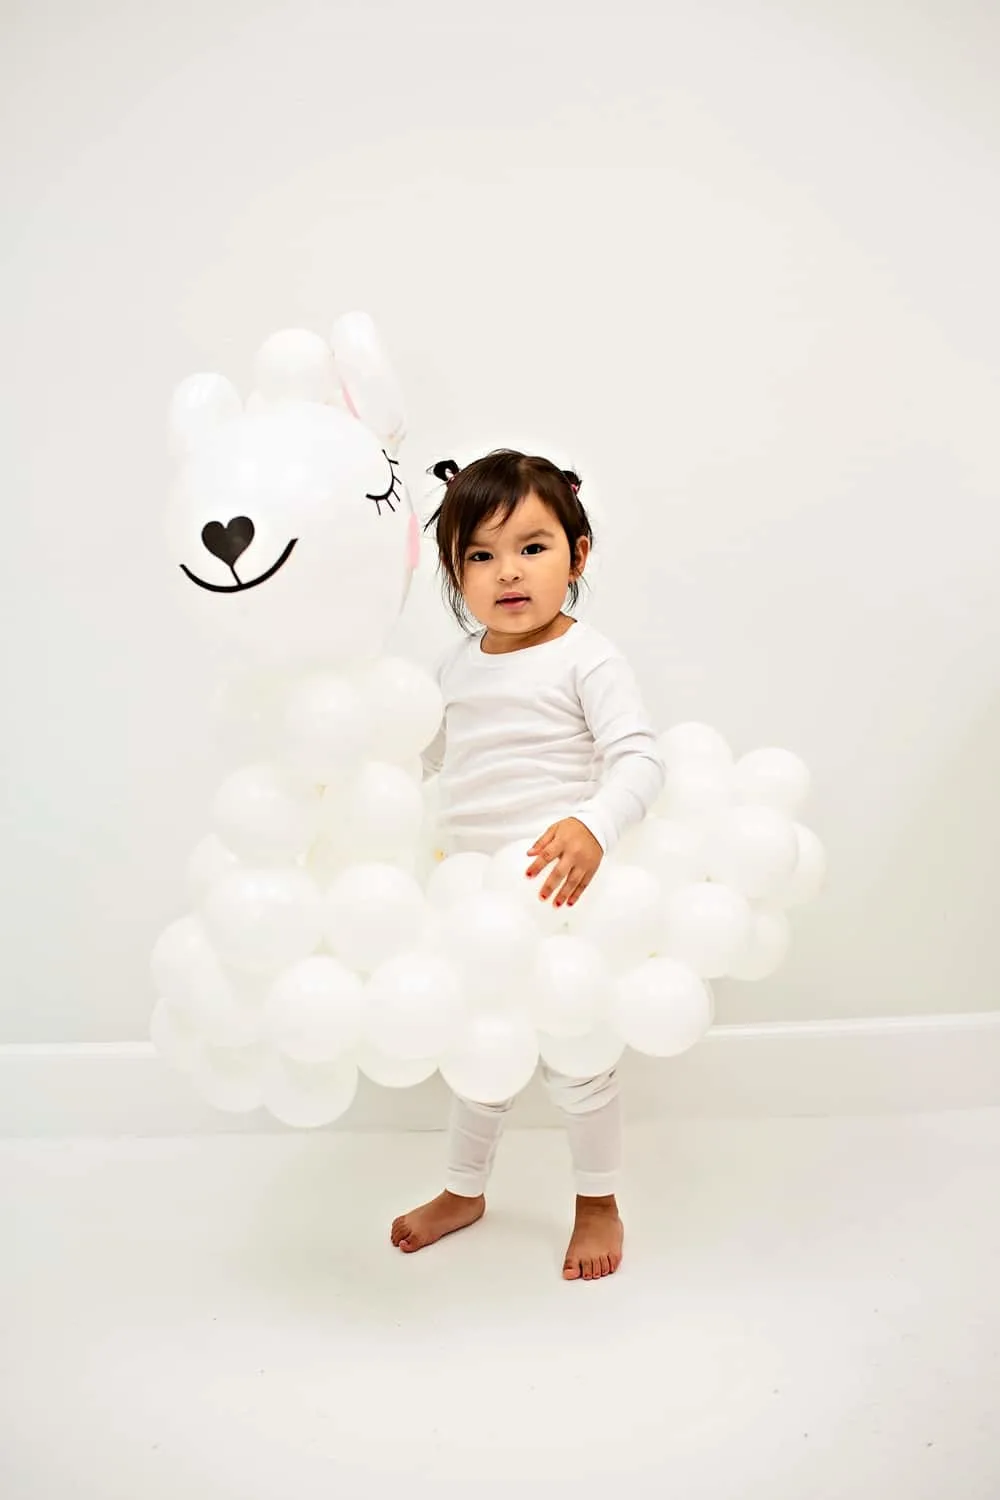 DIY Llama Balloon Costume for Kids - Halloween costume